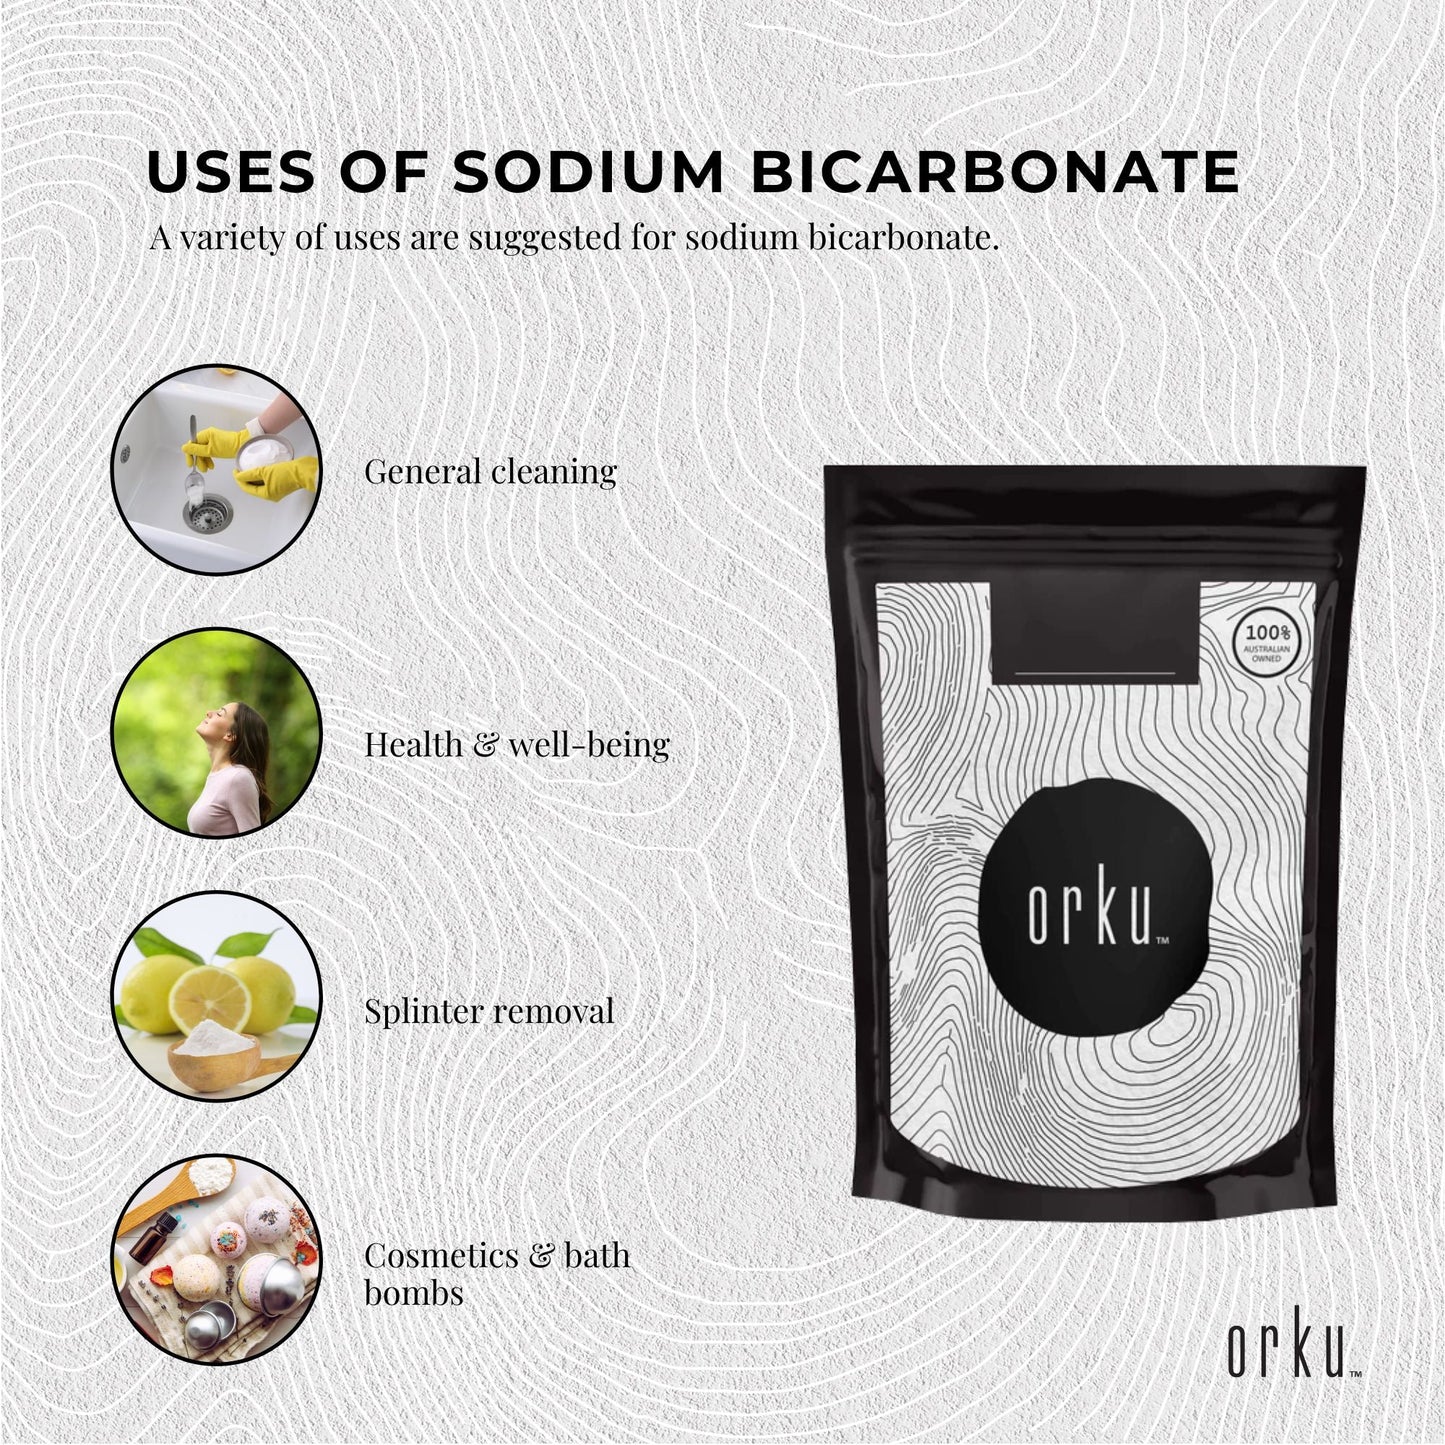 100g Sodium Bicarbonate - Food Grade Bicarb Baking Soda Hydrogen Carbonate